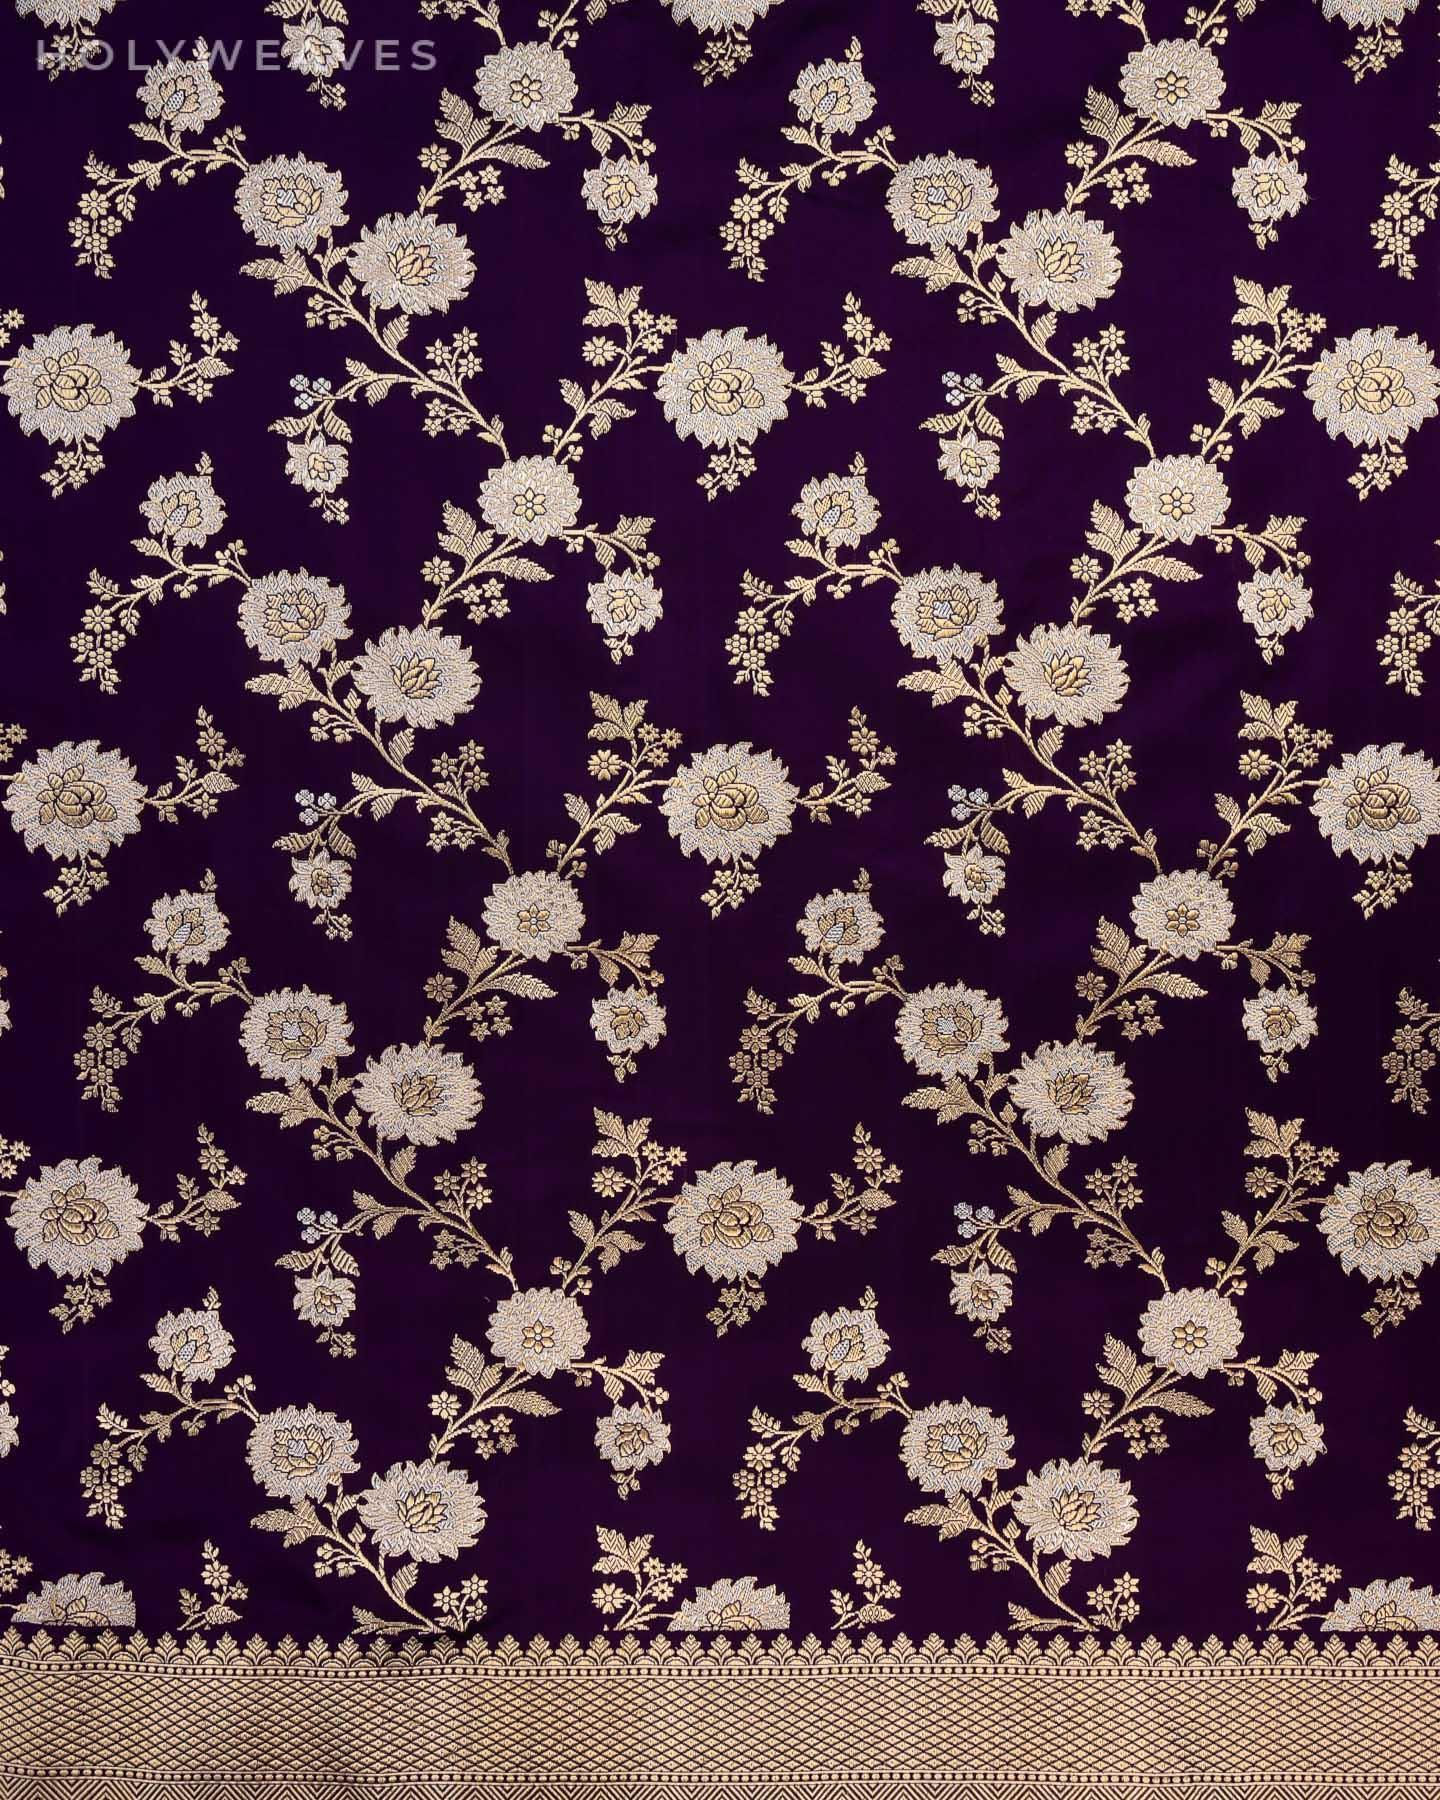 Deep Purple Banarasi Alfi Sona Rupa Jaal All-over Kadhuan Brocade Handwoven Katan Silk Saree - By HolyWeaves, Benares